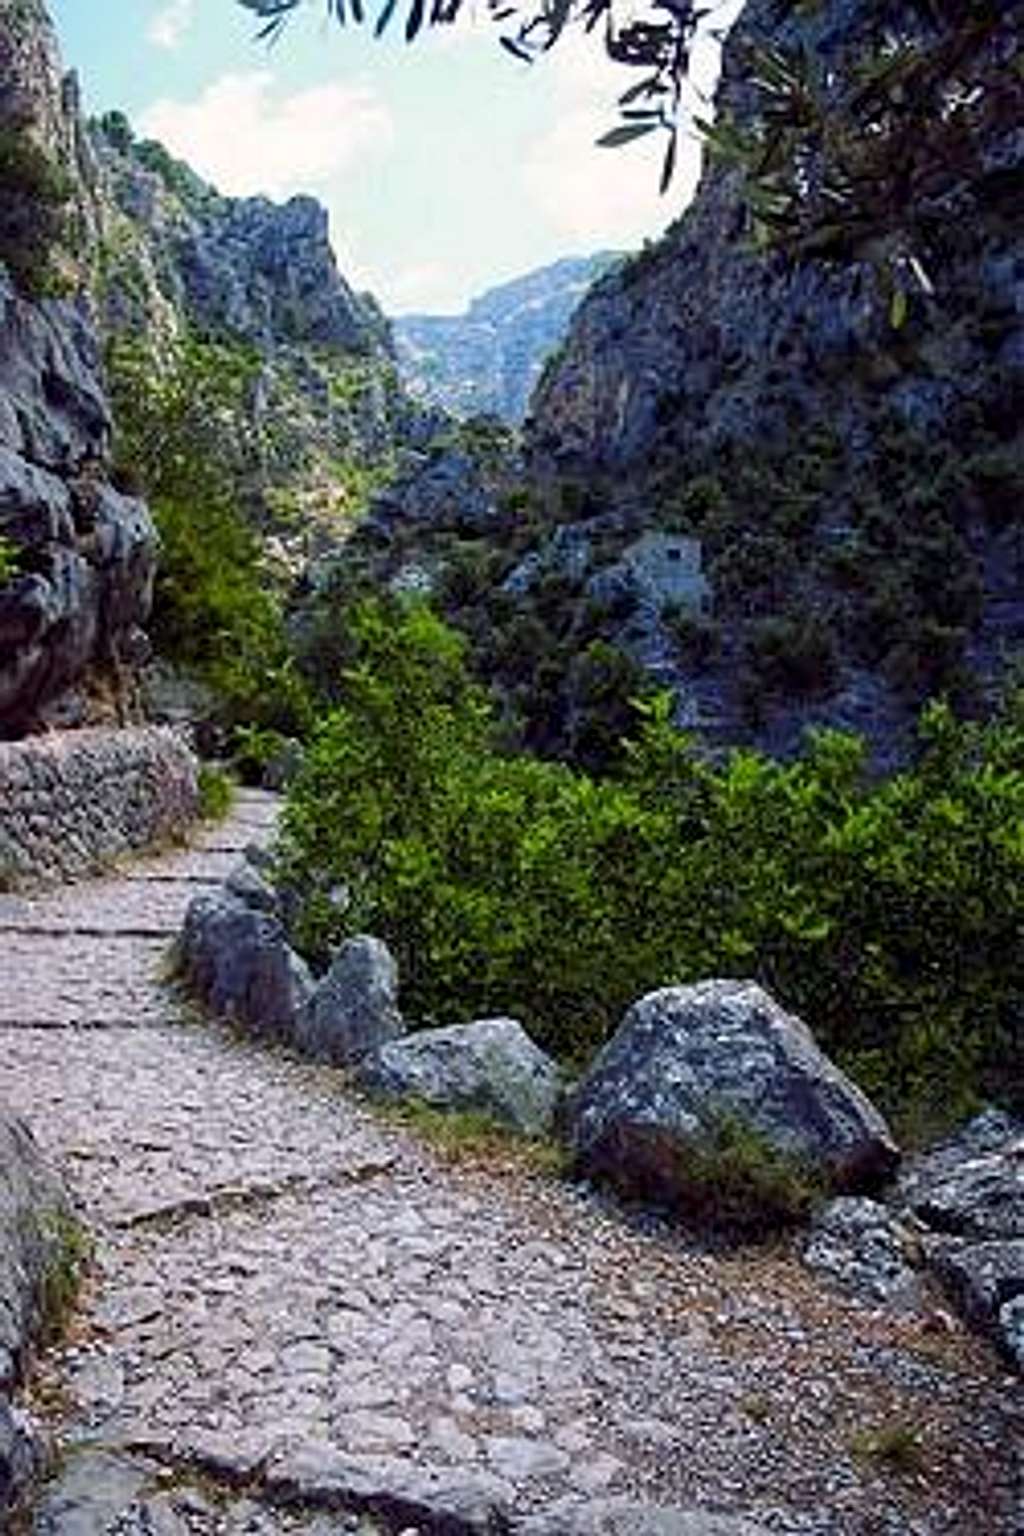 Old Cobble stoned foot-paths (Barranc de Biniaraix)